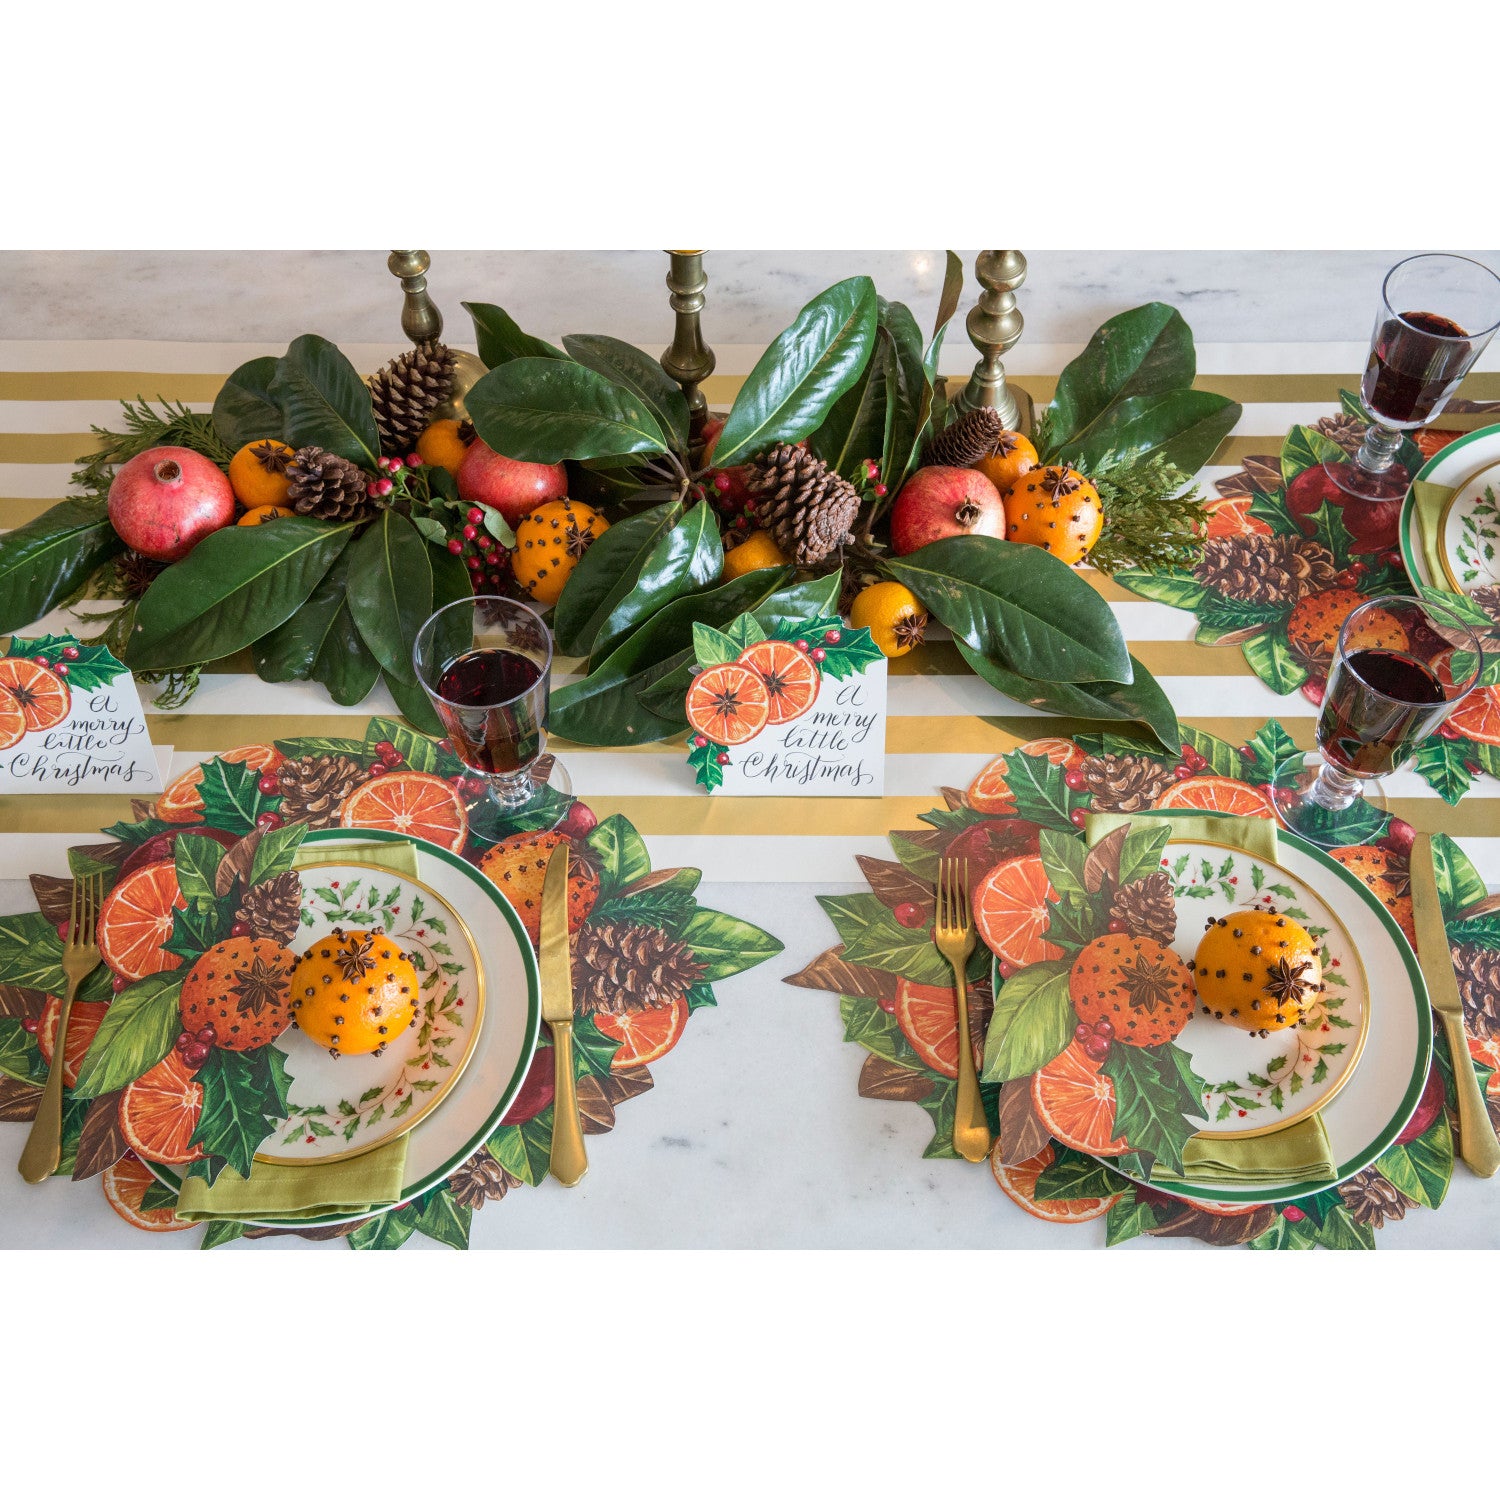 The Die-cut Winter Citrus Placemat under a festive table setting.